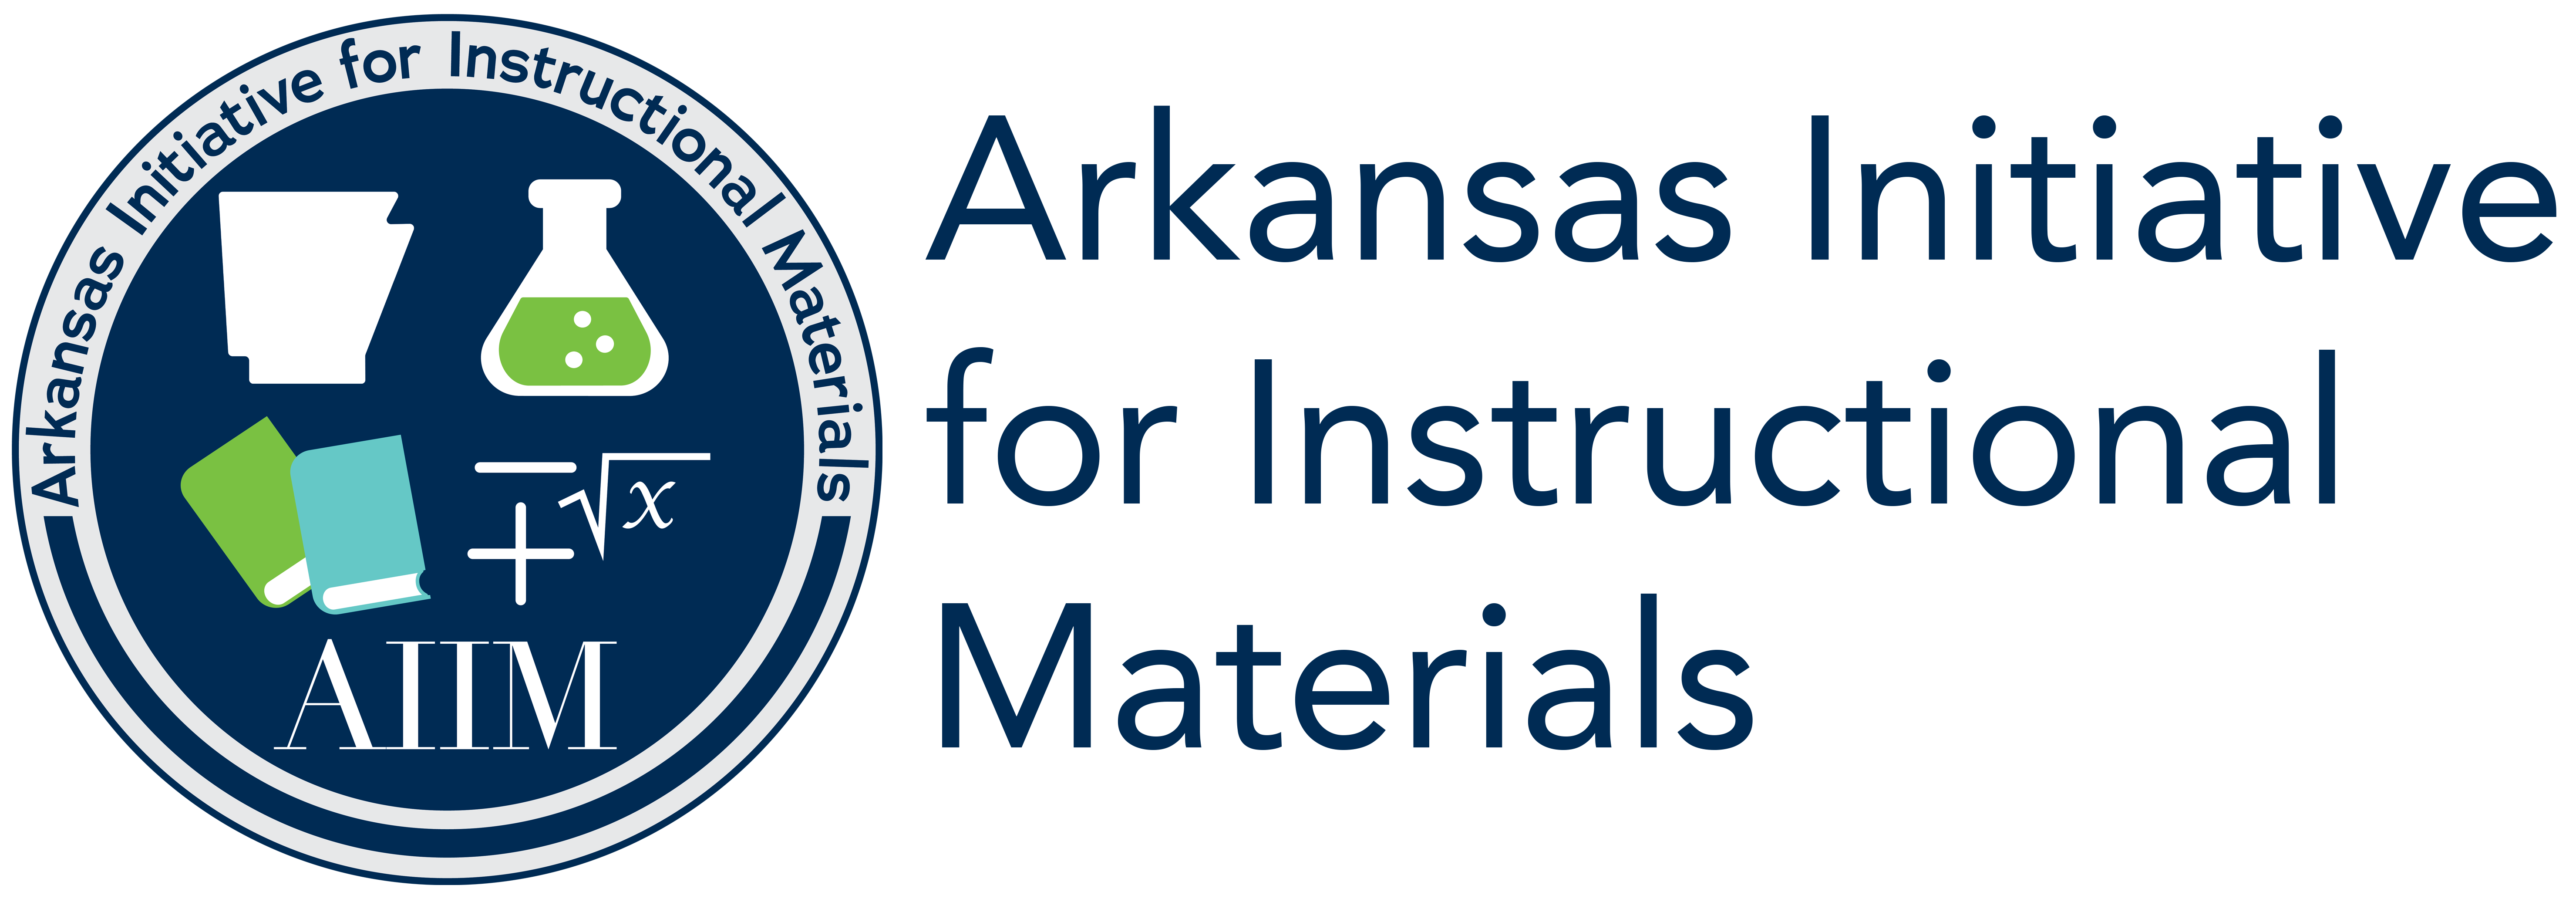 Arkansas Initiative for Instructional Materials